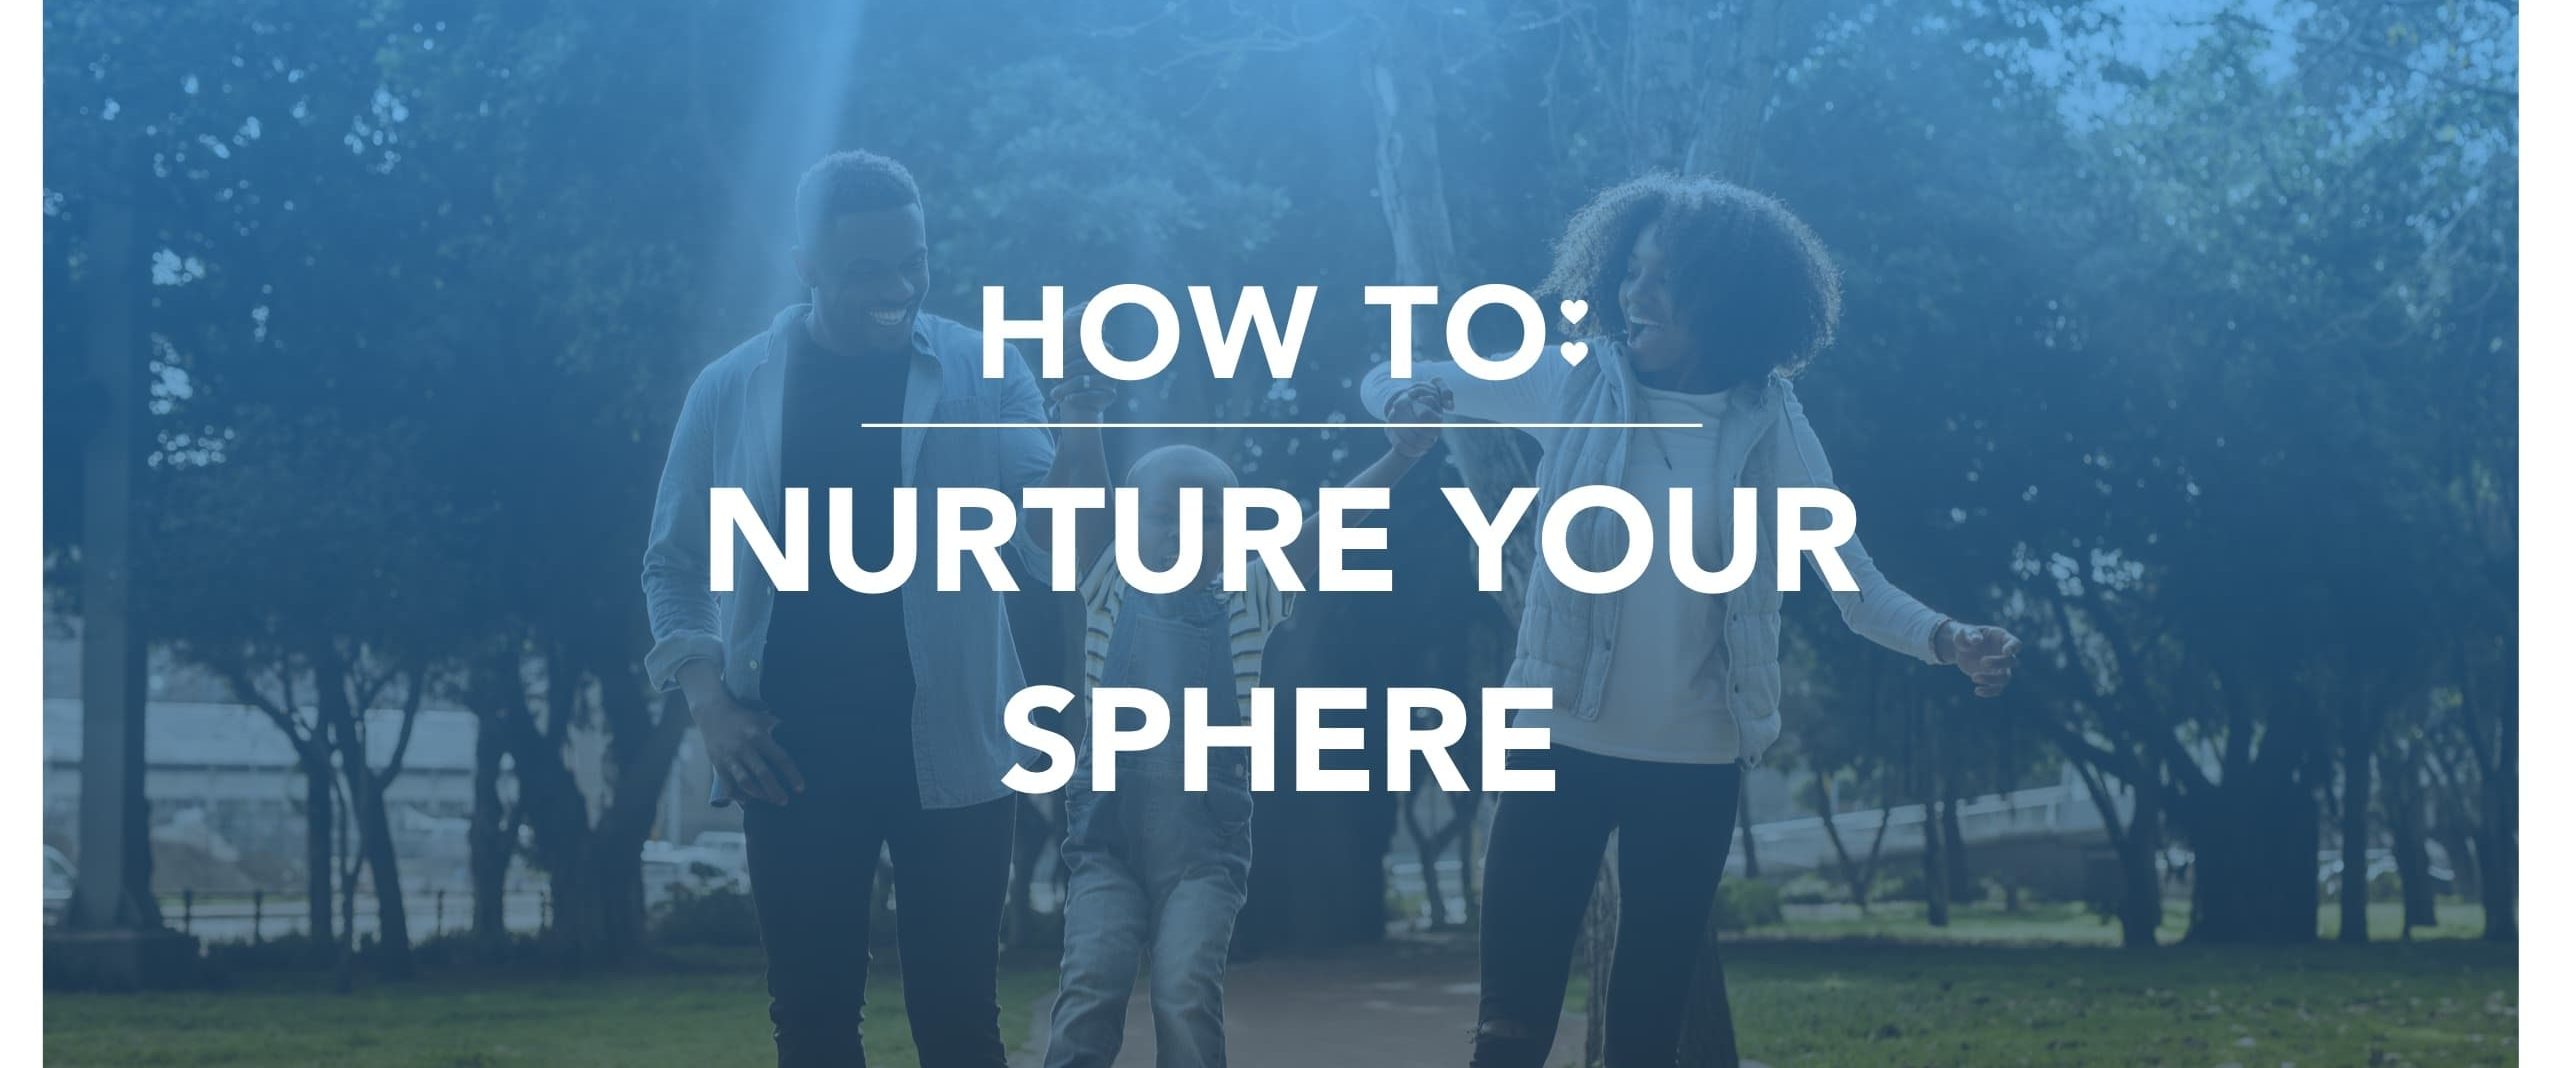 How to Nurture Your Sphere Header